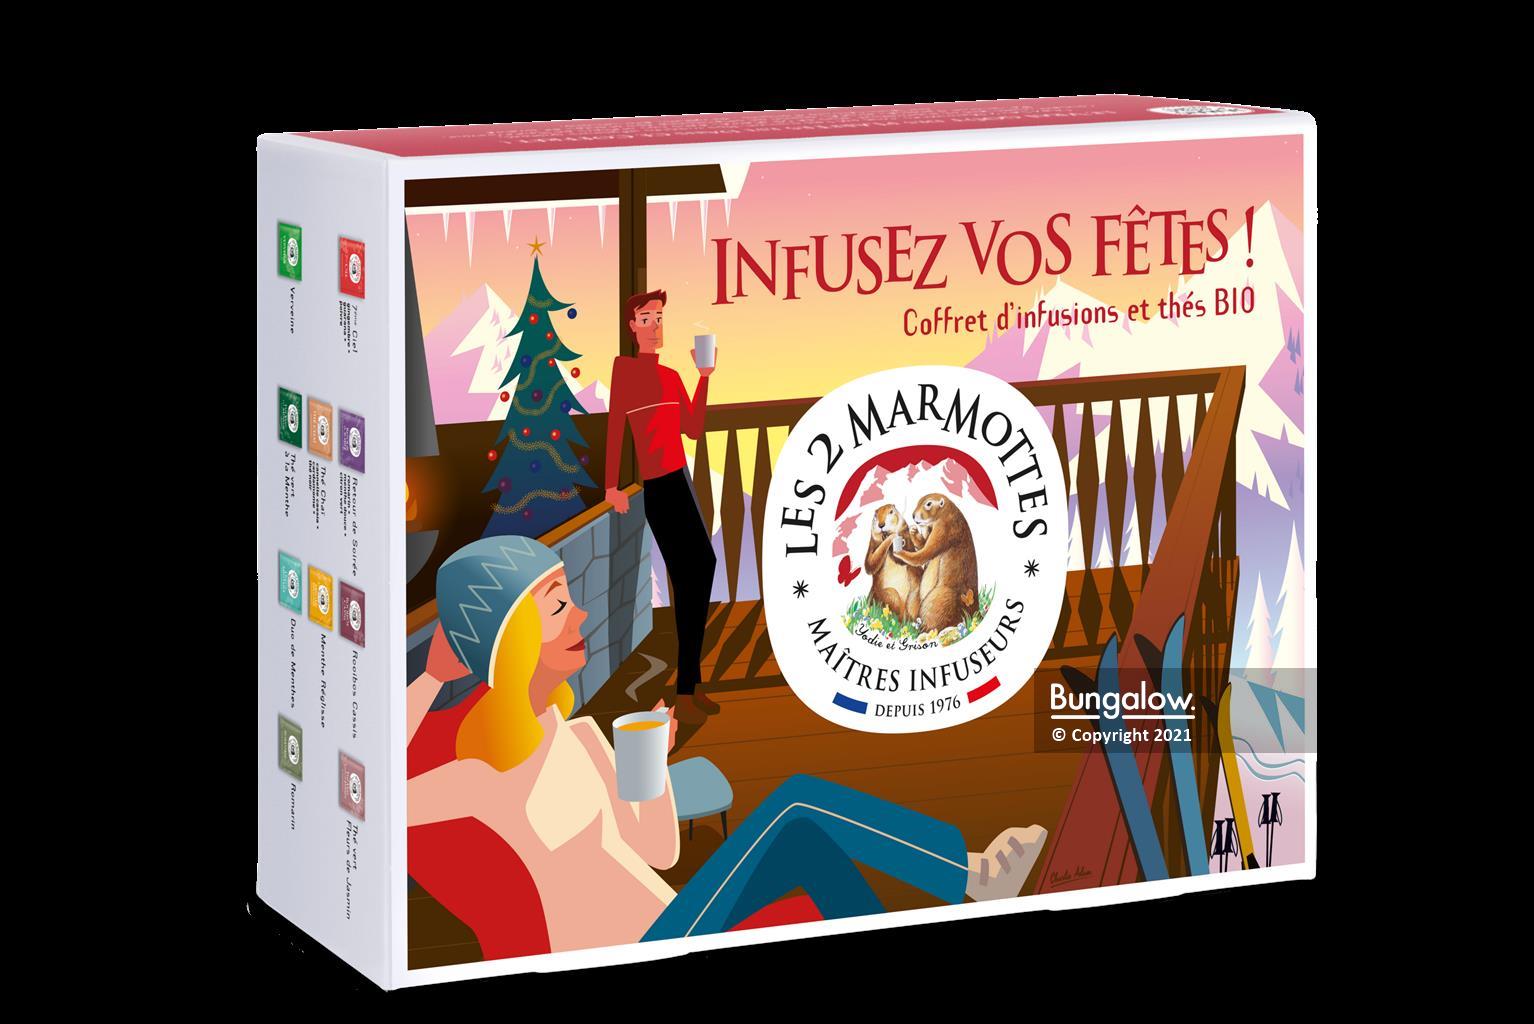 Coffret infusions les 2 Marmottes by Charlie Adam : Bungalow